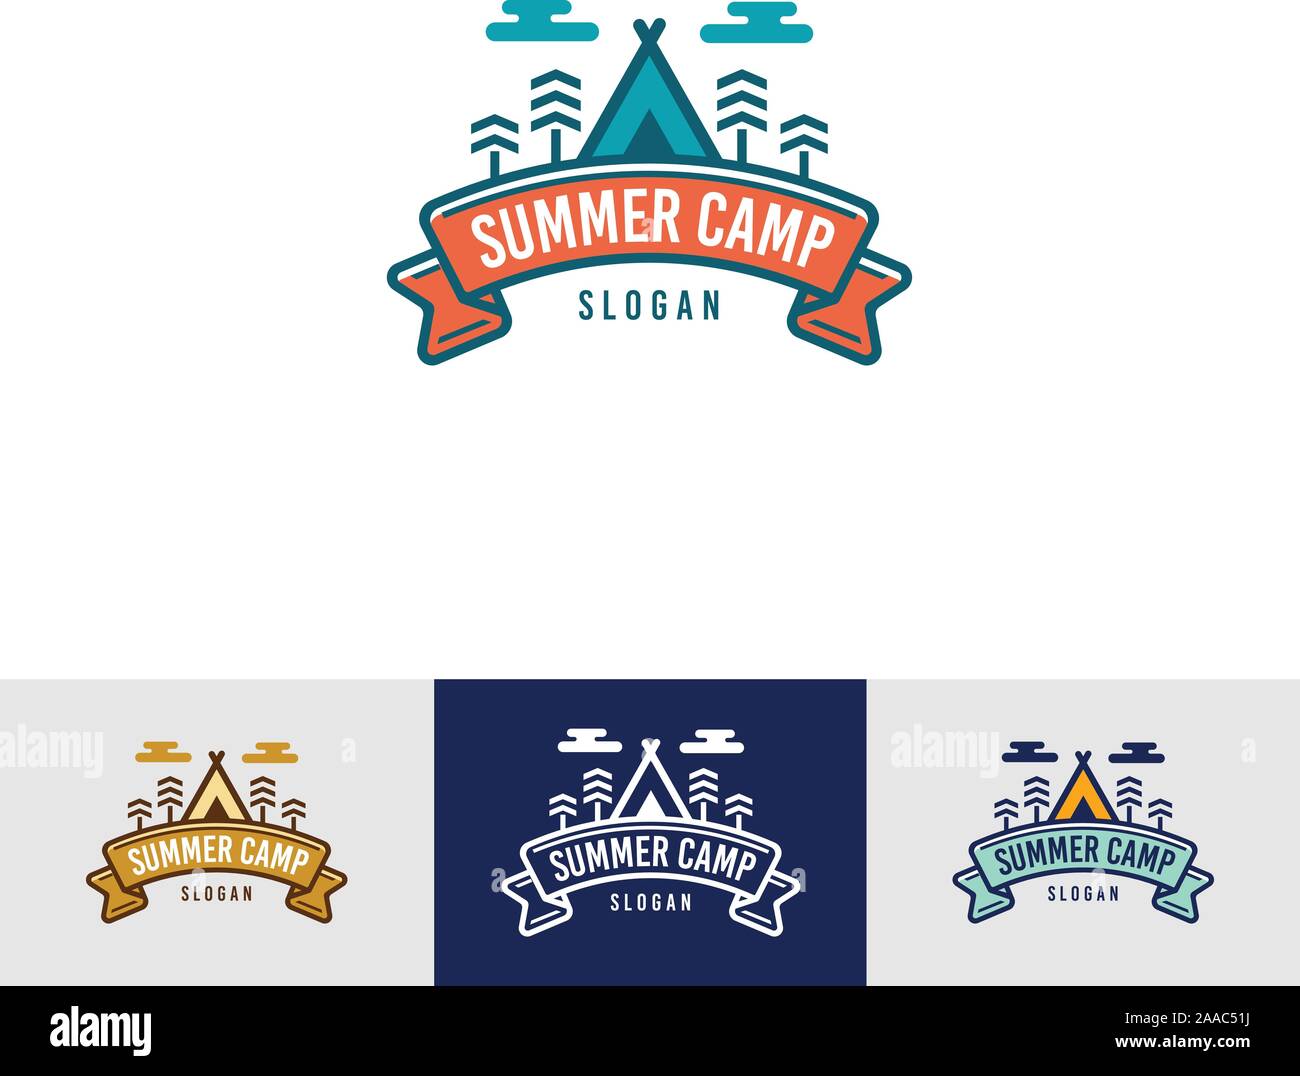 camp logo ideas 5